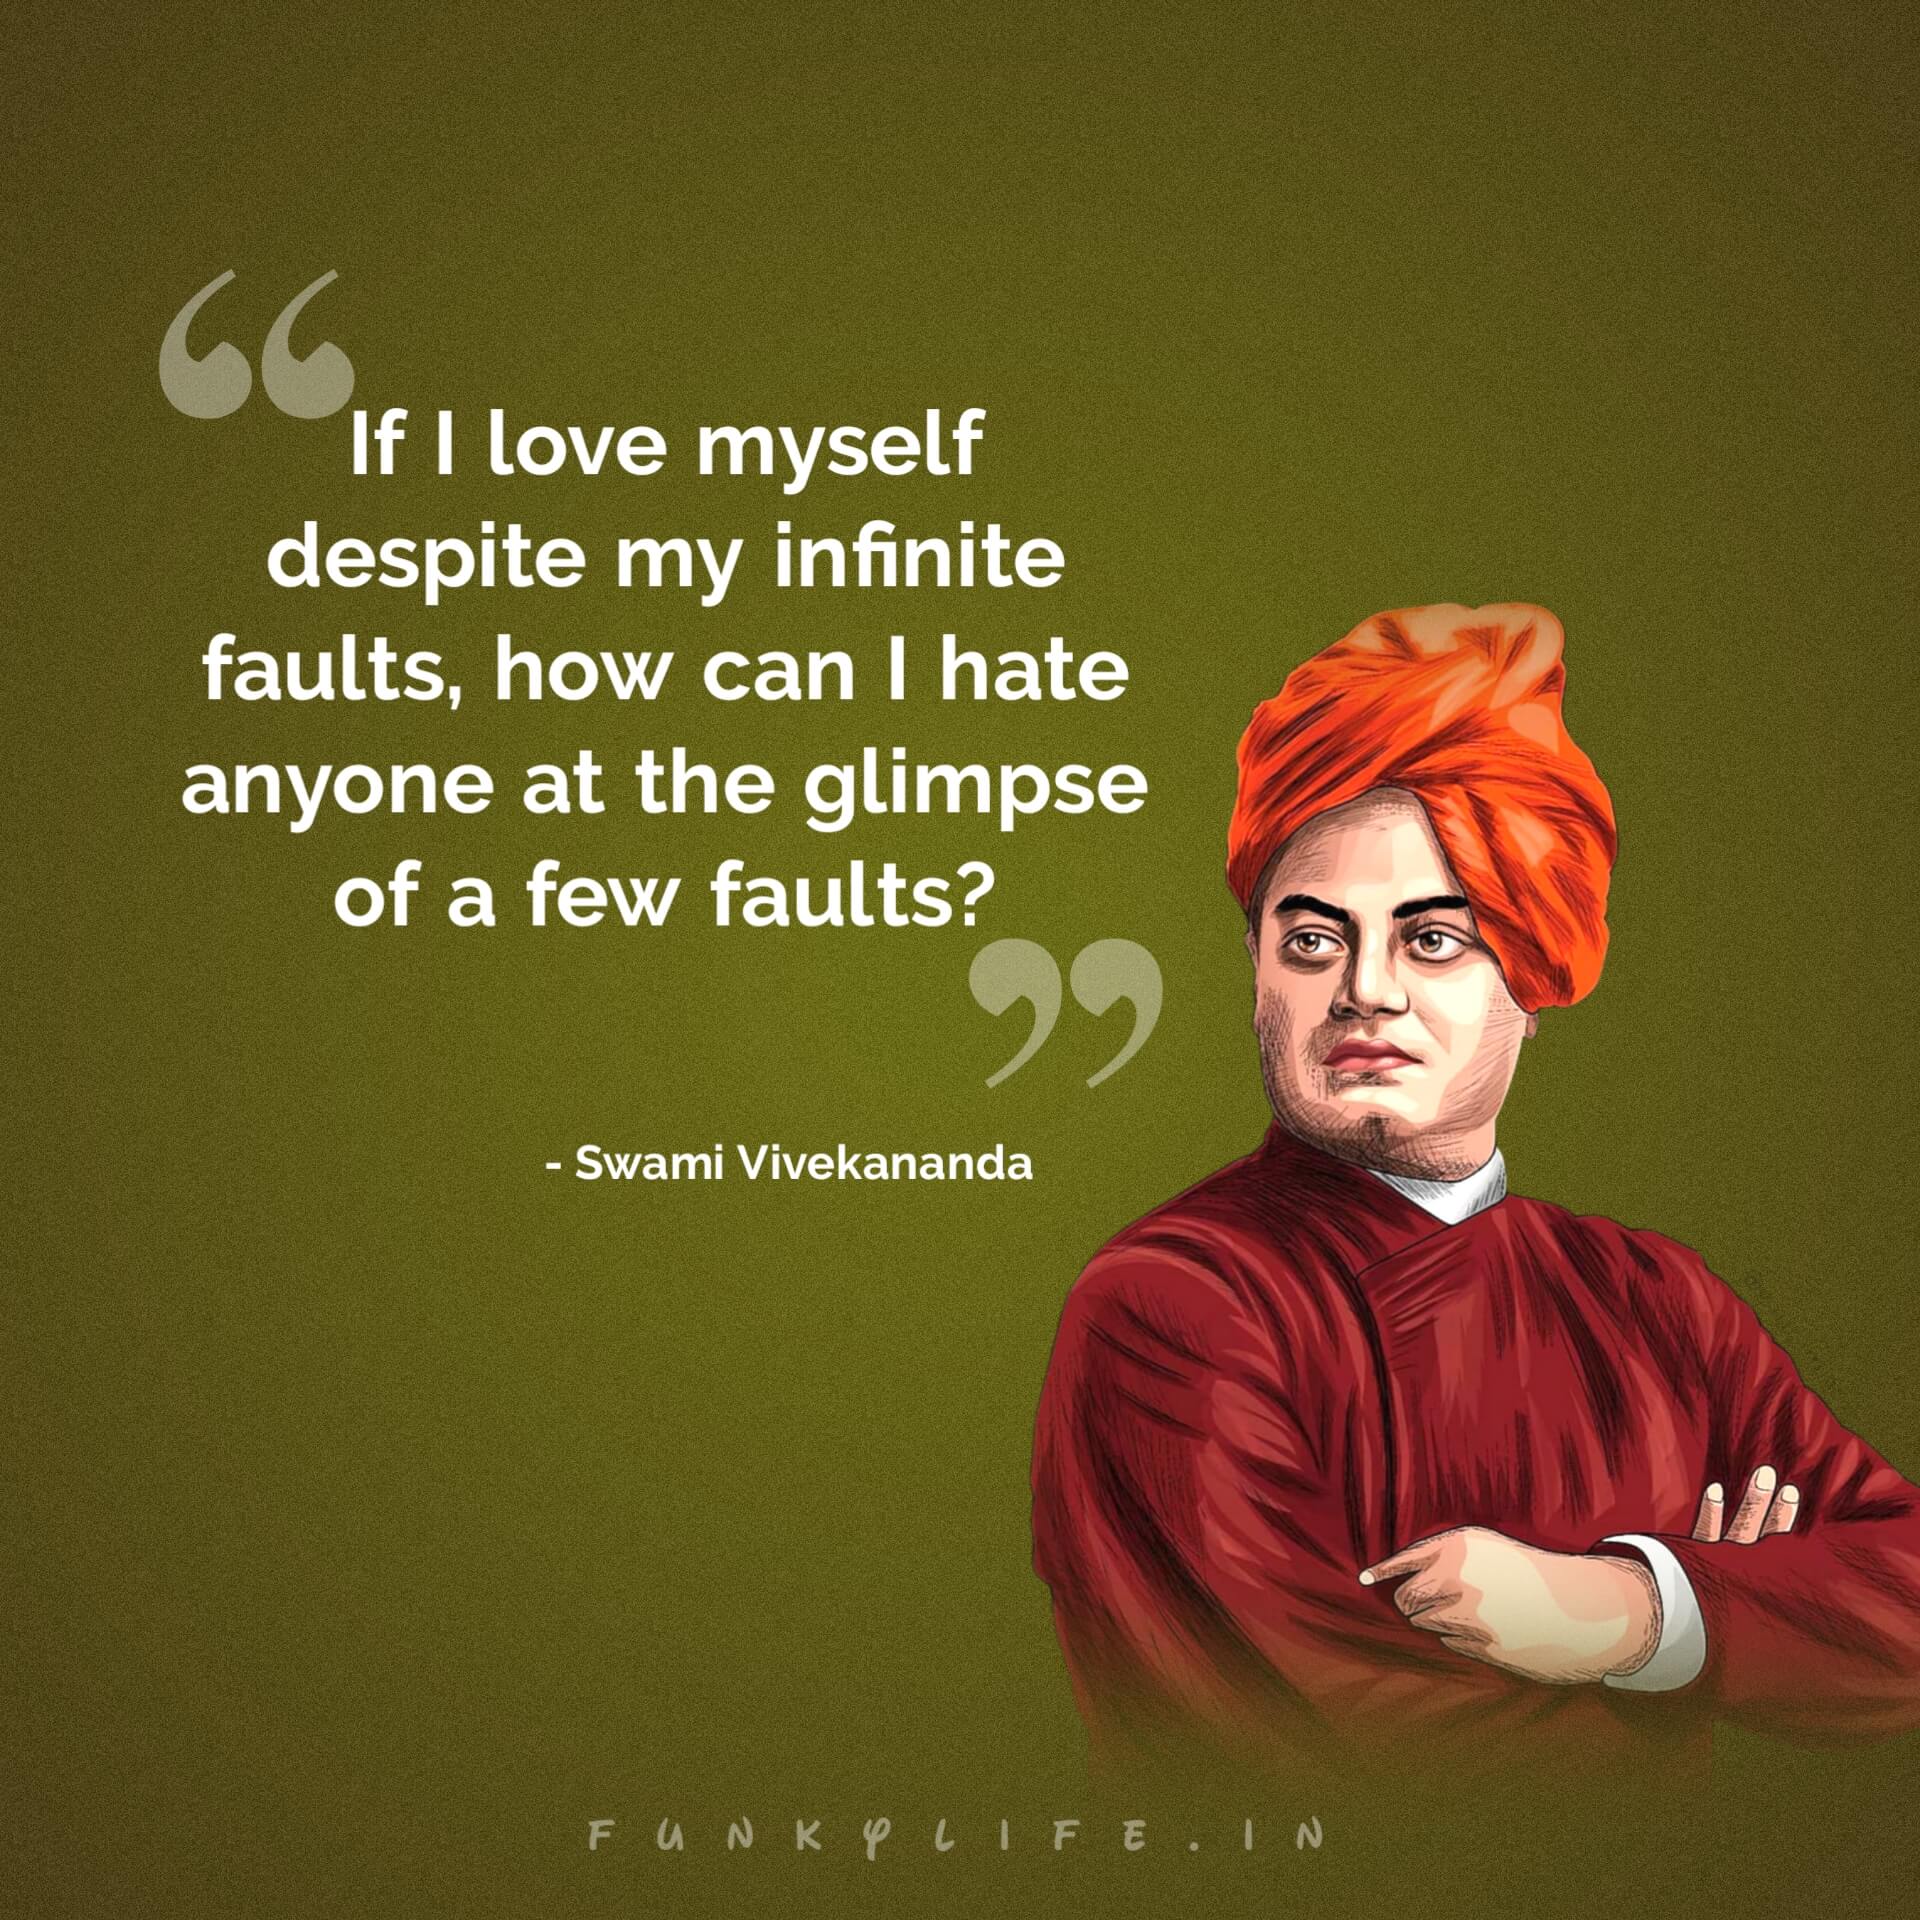 Swami Vivekananda Quotes in English
Strength 